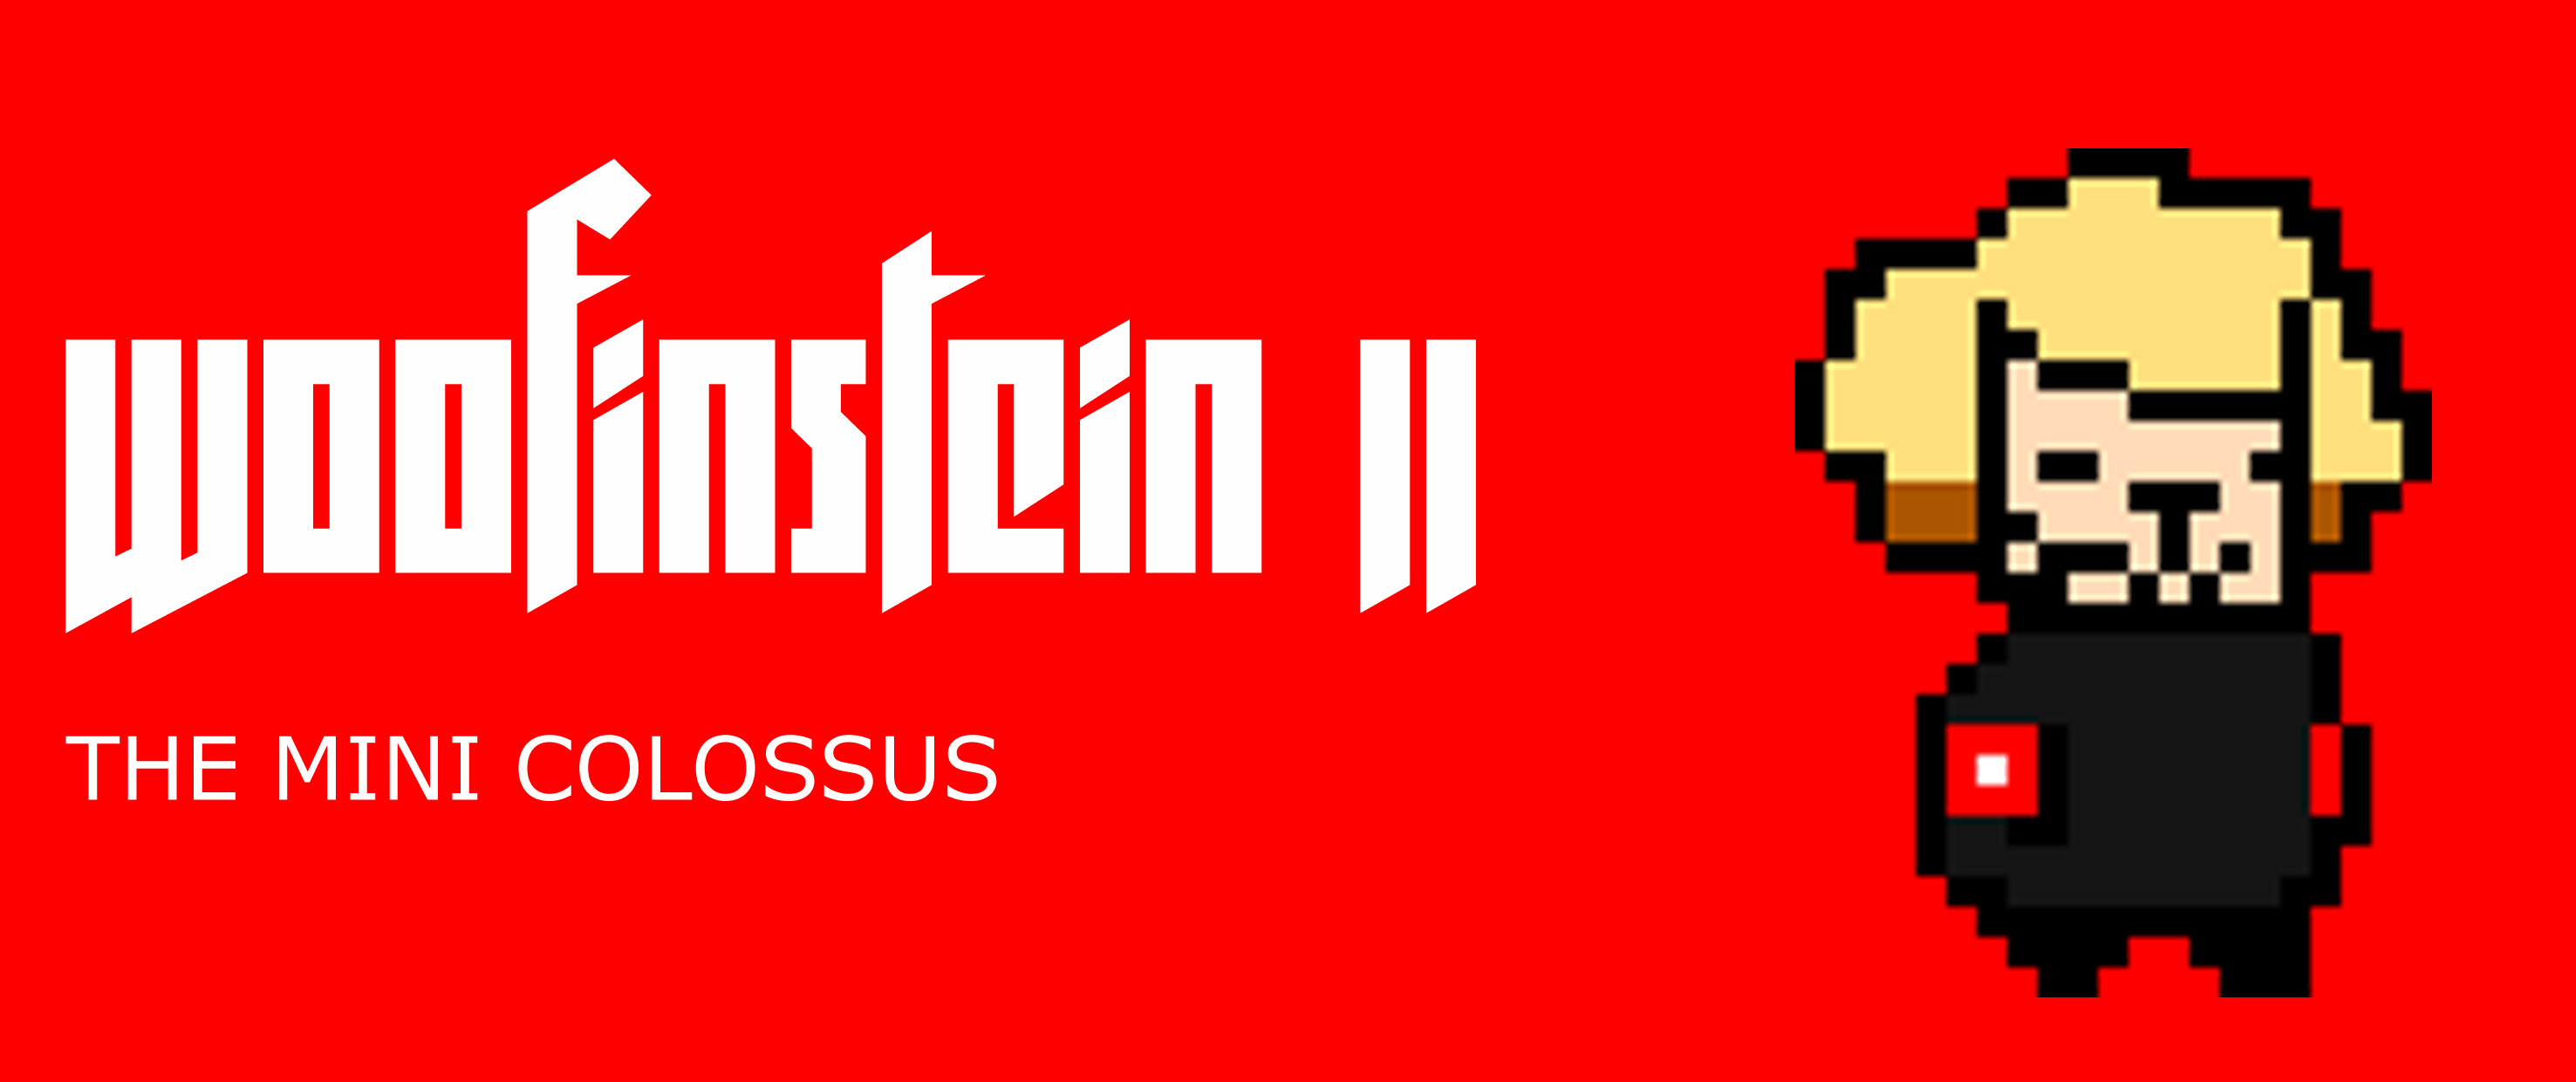 Woofinstein II: The Mini Colossus